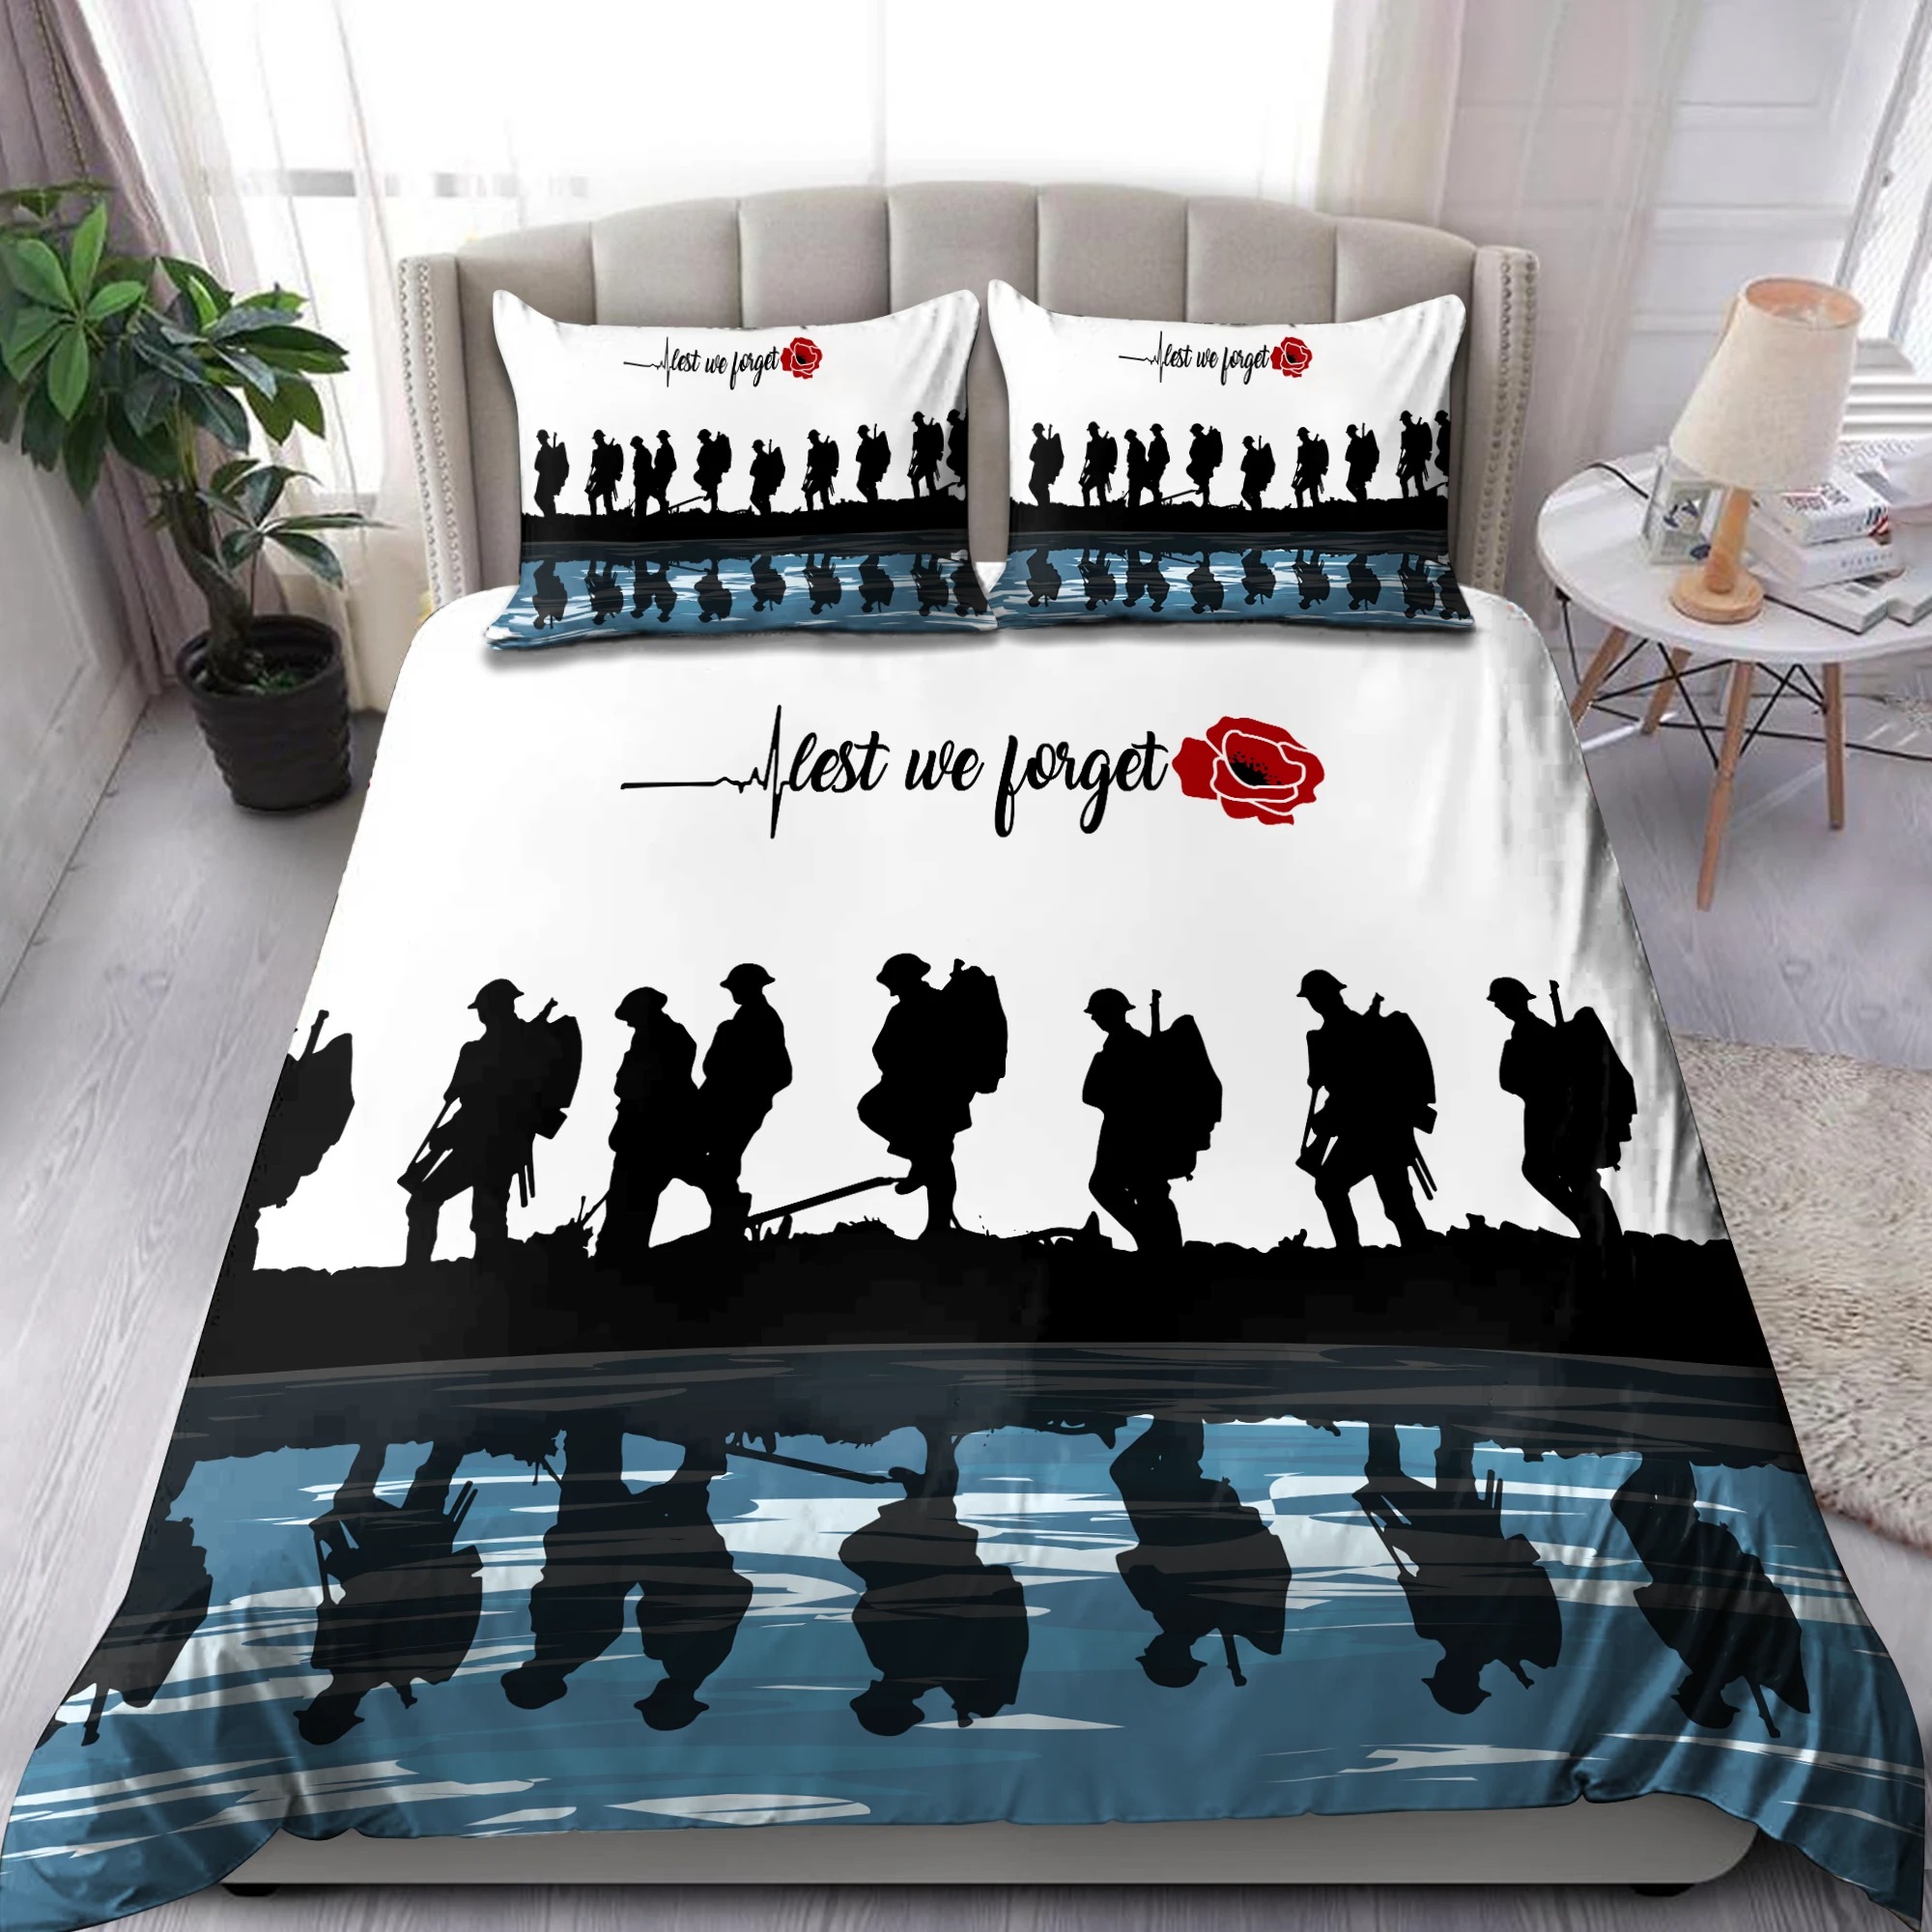 UK Veteran Let we forget honor the fallen bedding set